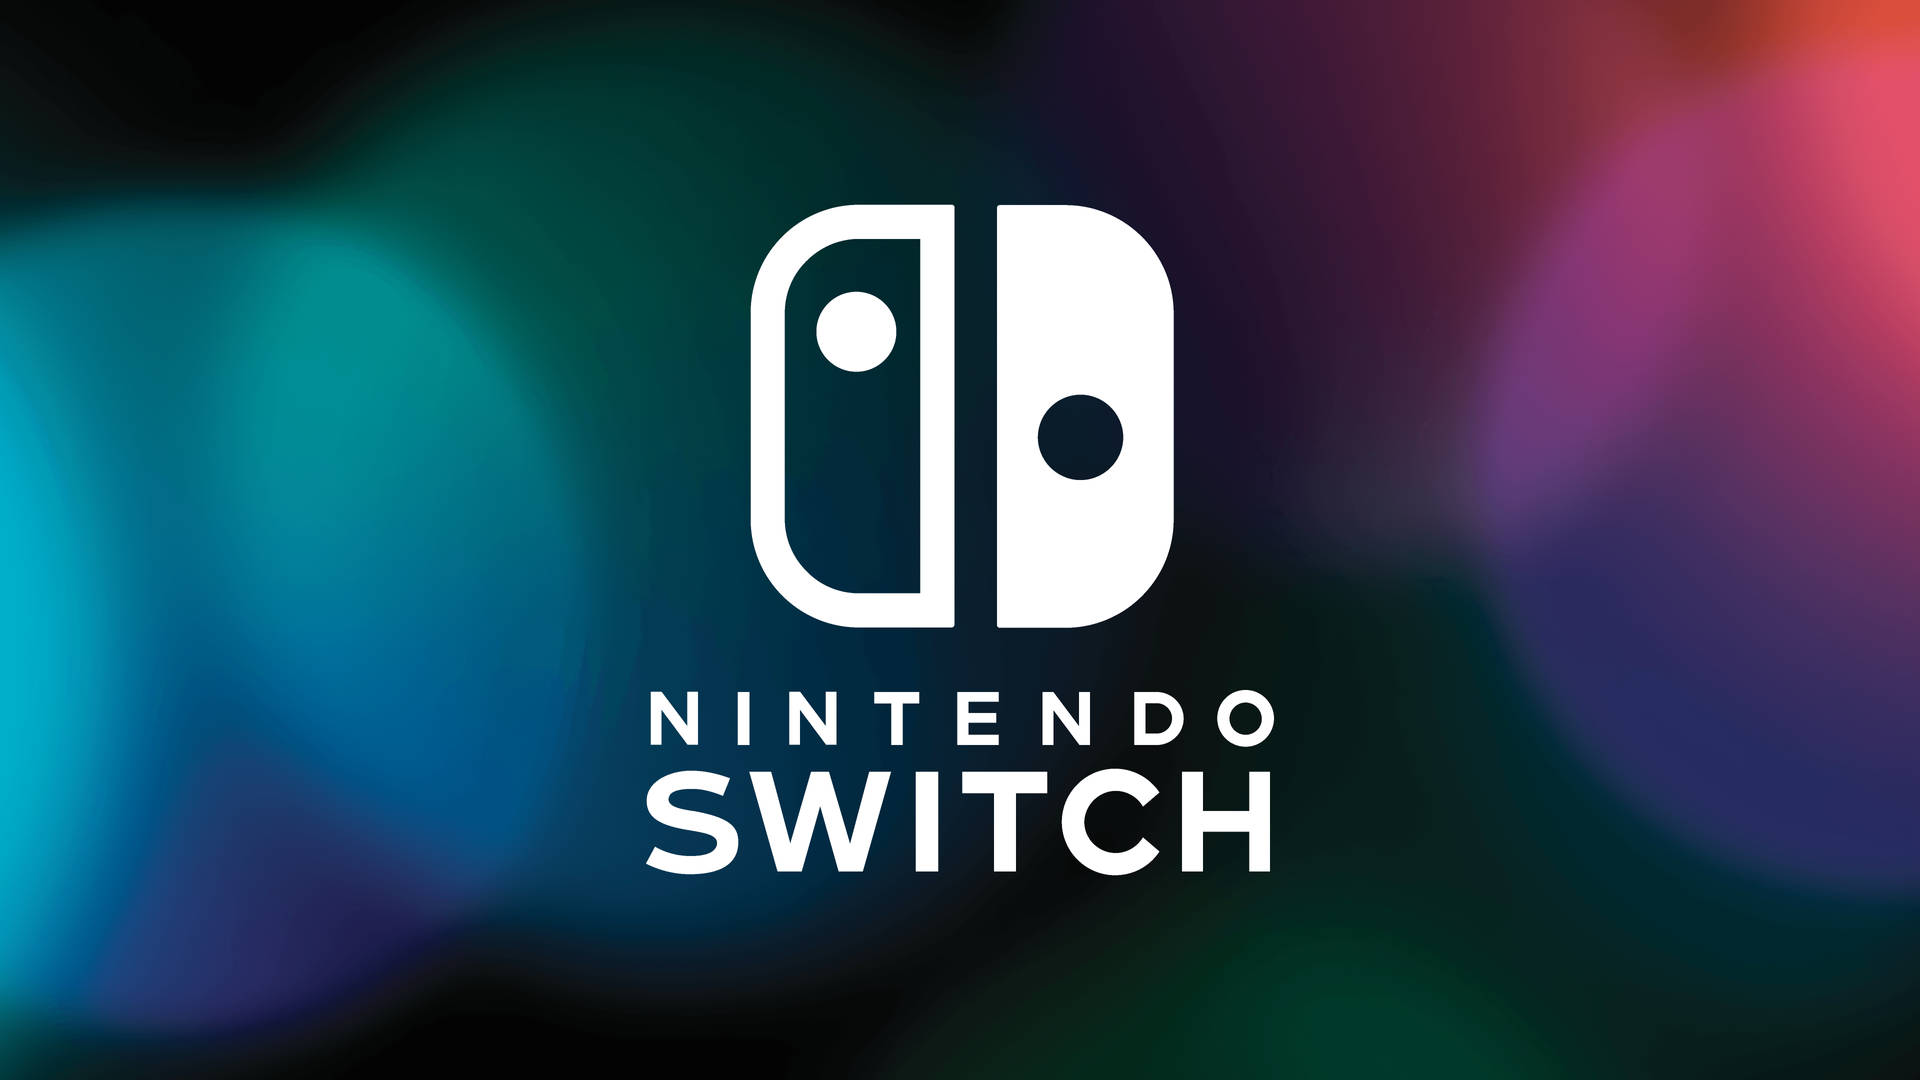 Nintendo Switch Artwork Background